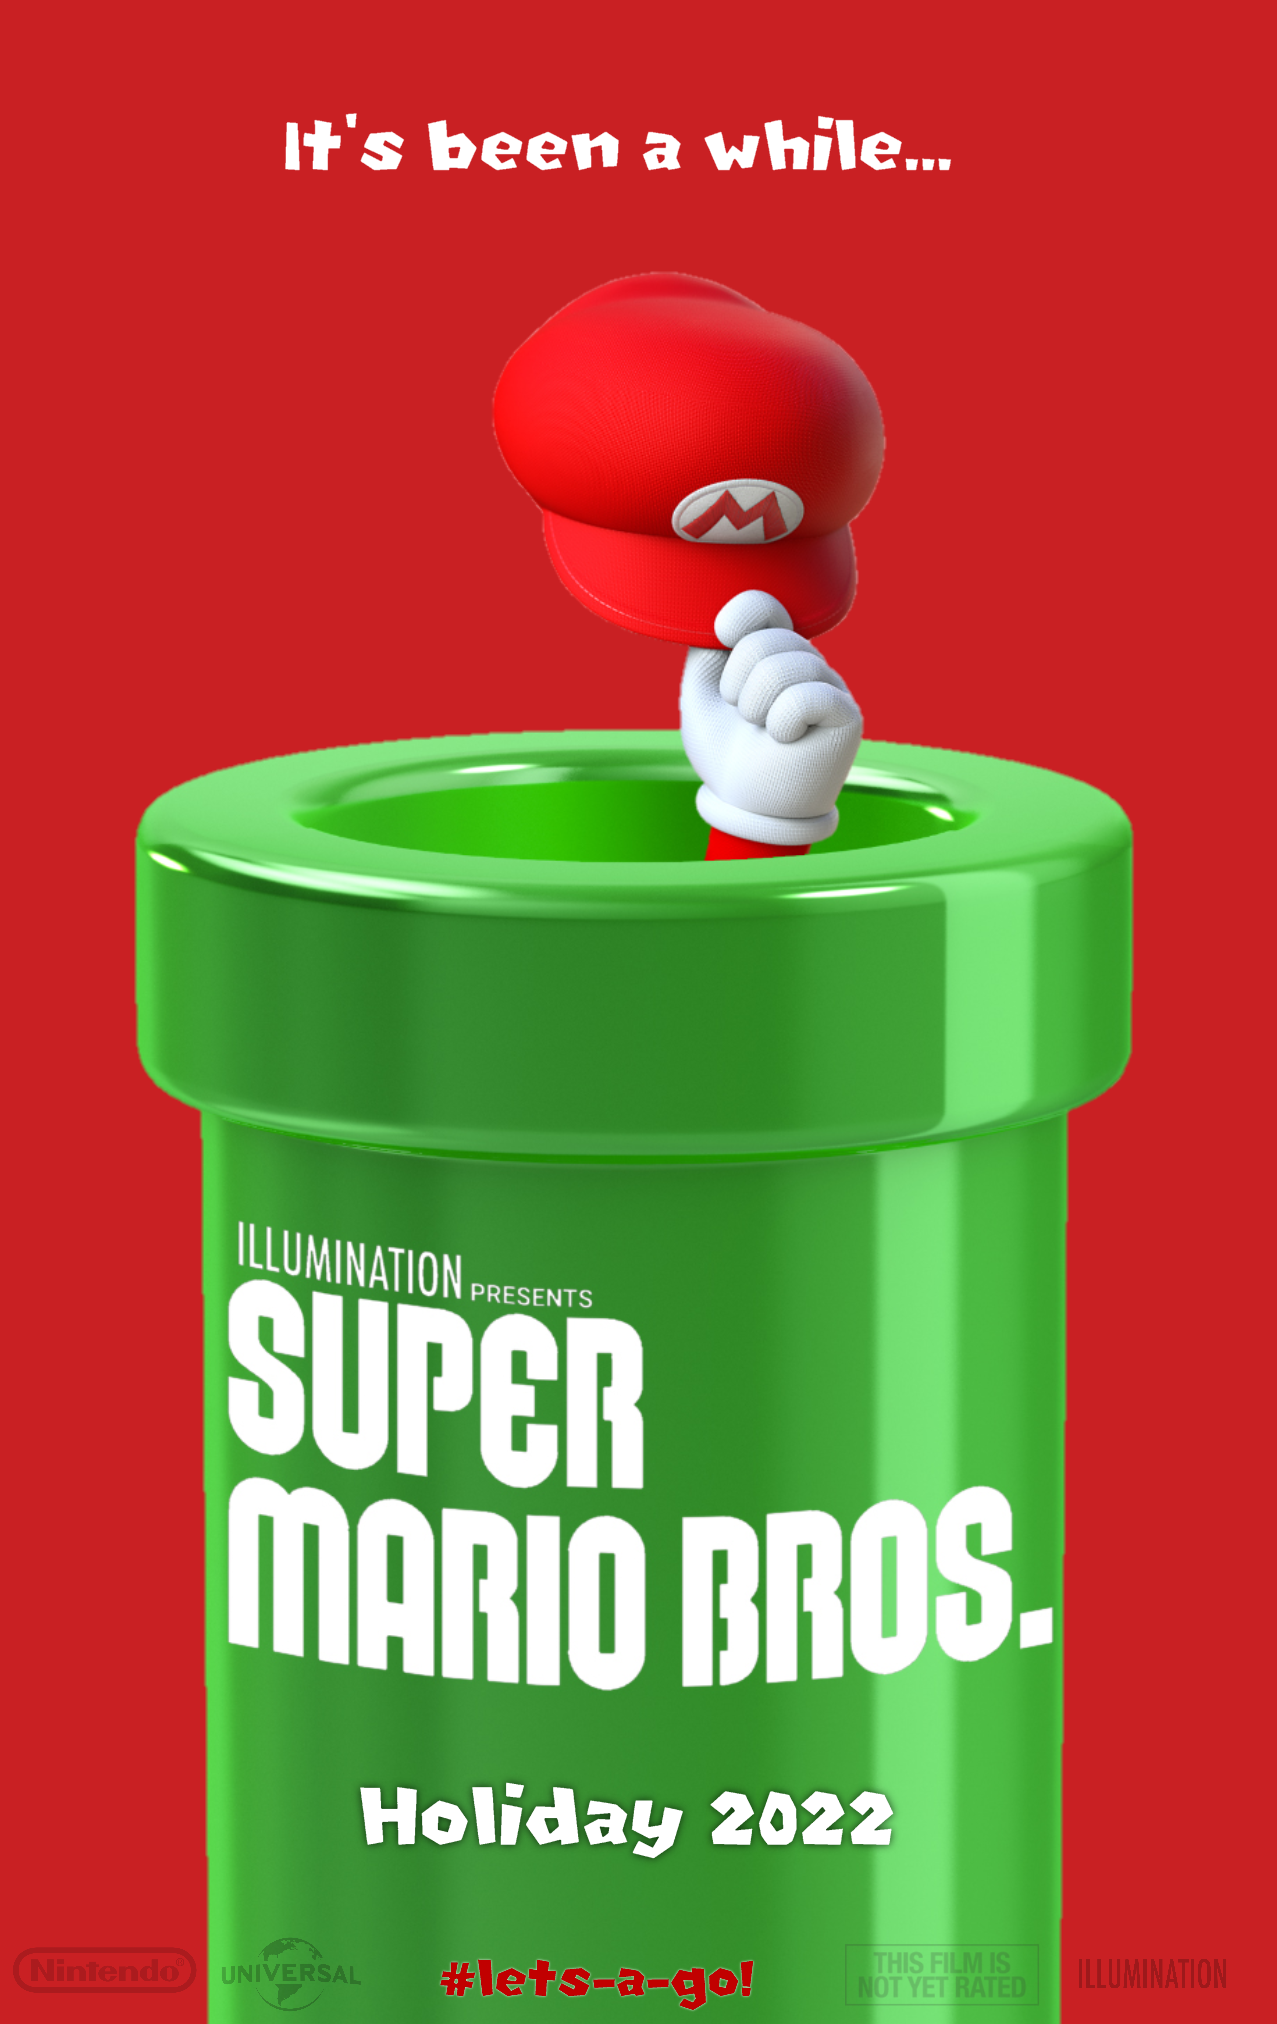 I made a fanmade Luigi's mansion movie teaser poster : r/Mario